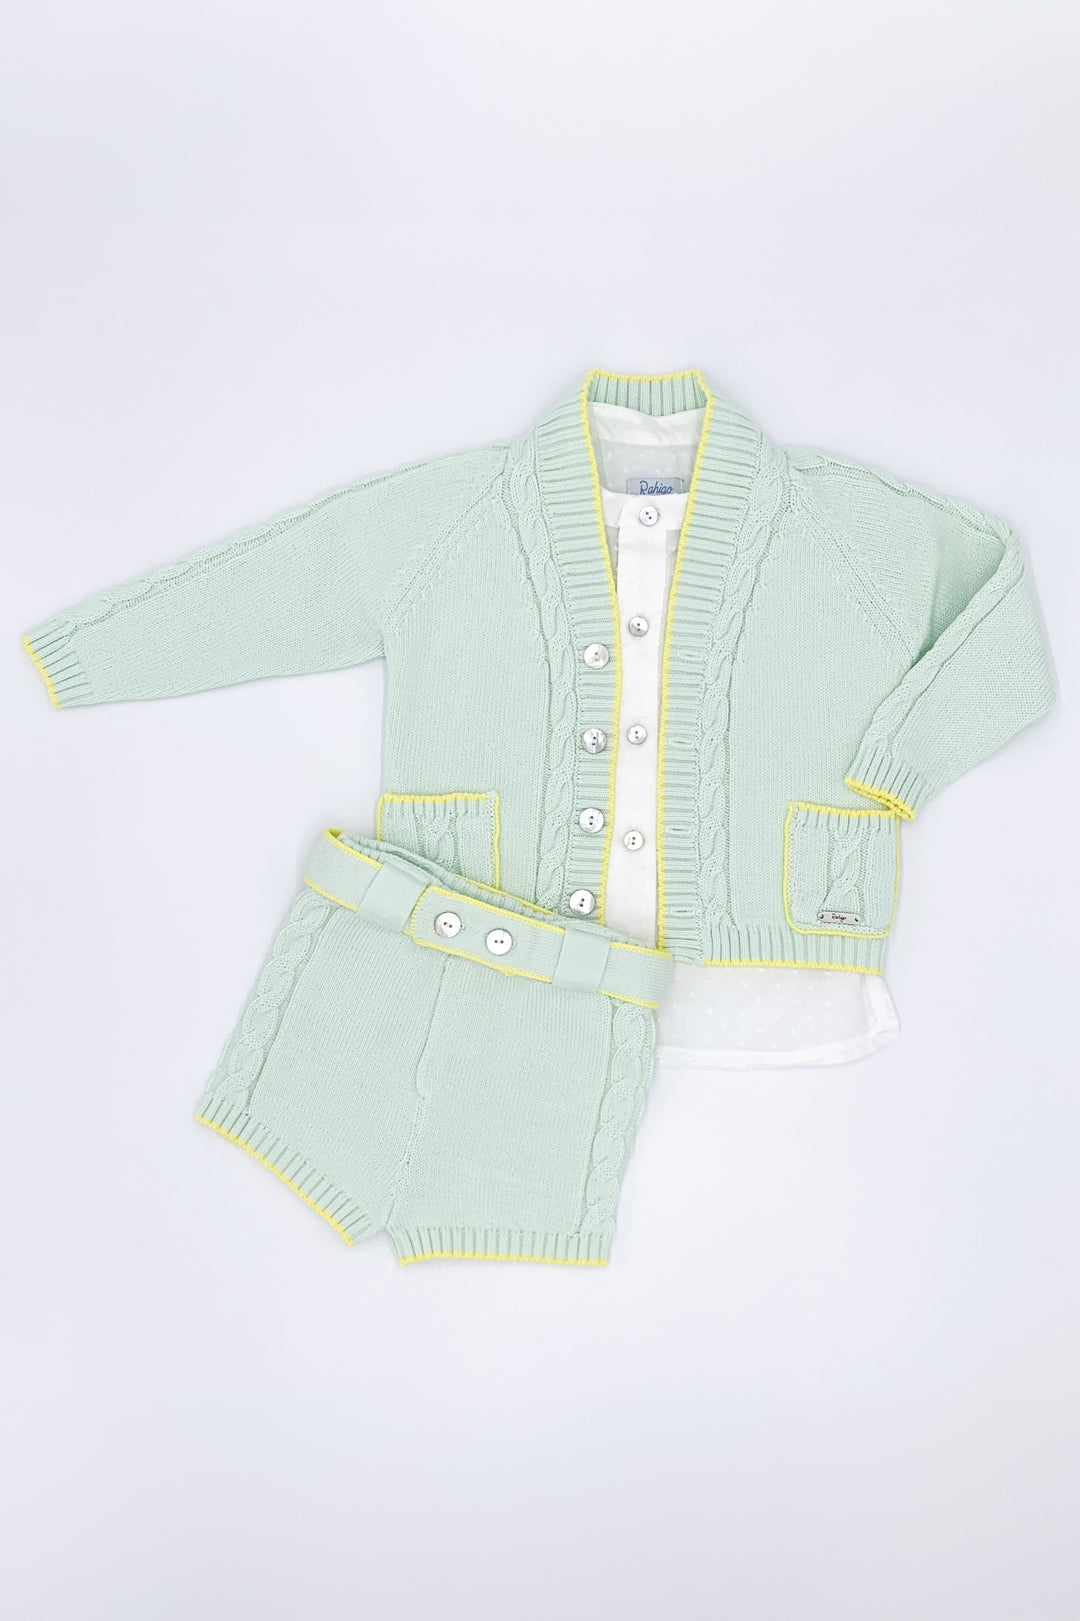 Rahigo PREORDER "Stanley" Mint & Lemon Knit Cardigan, Shirt & Shorts | Millie and John